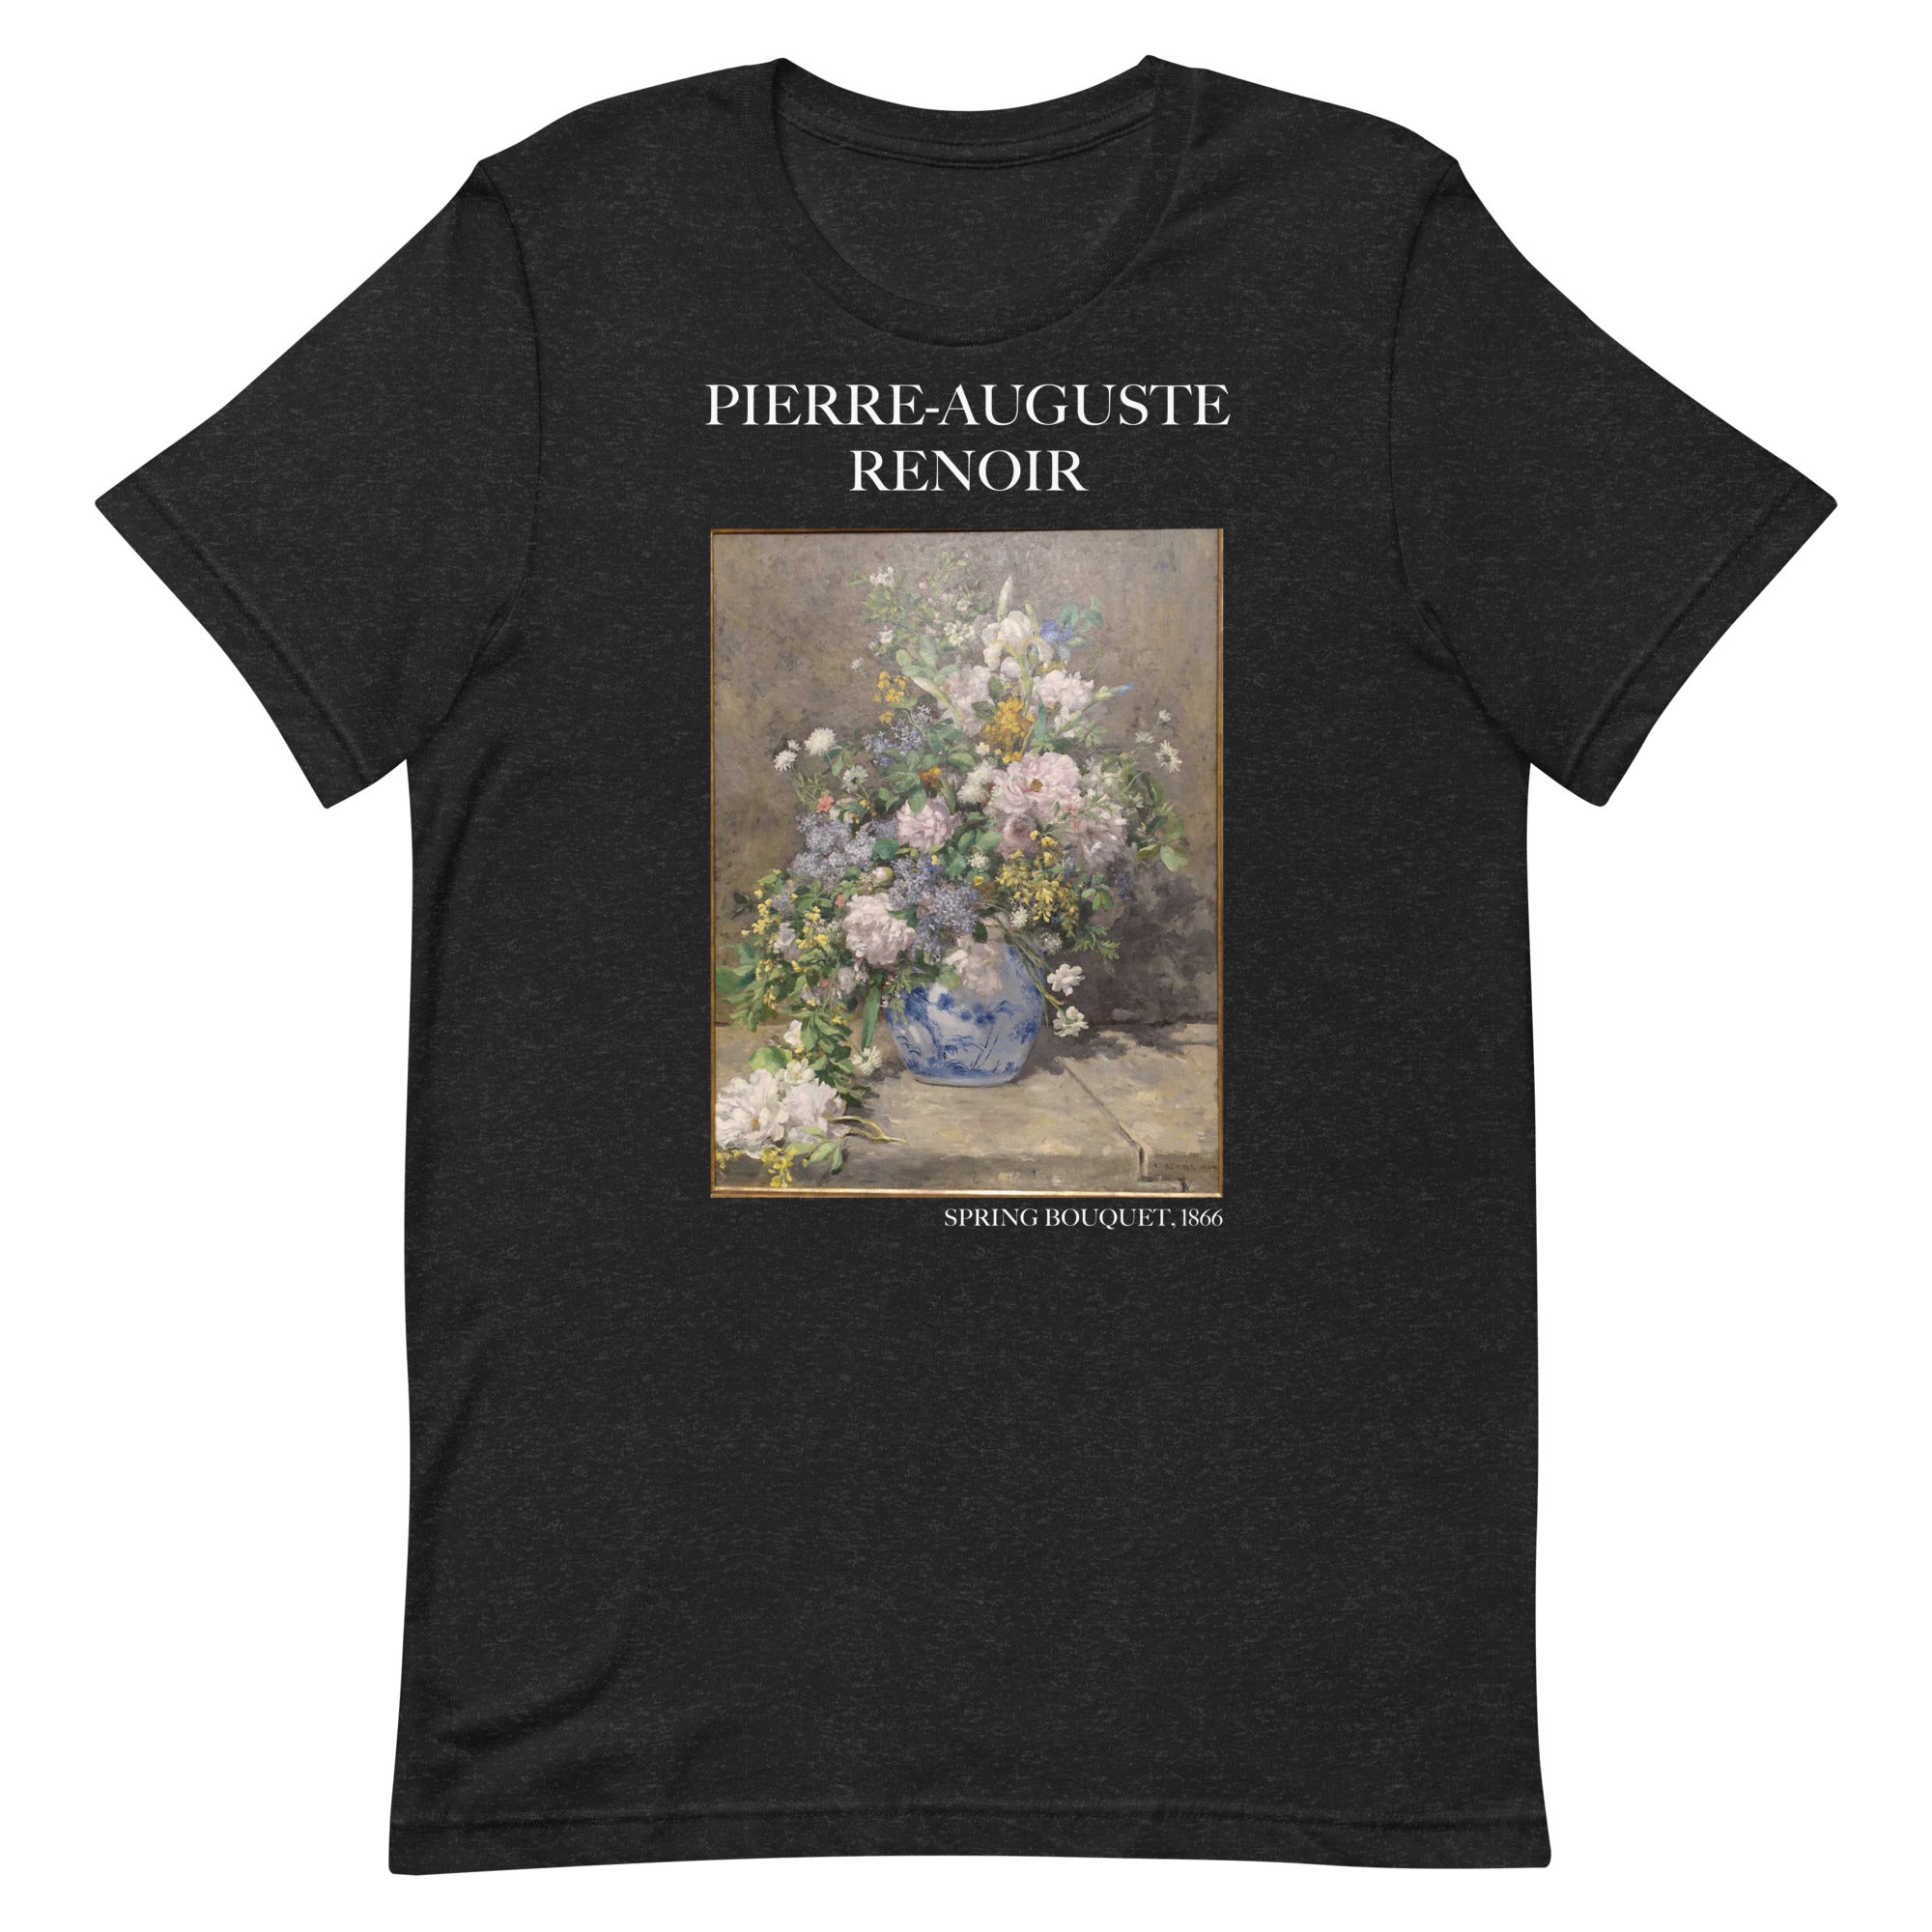 Pierre-Auguste Renoir 'Frühlingsstrauß' Berühmtes Gemälde T-Shirt | Unisex Klassisches Kunst-T-Shirt